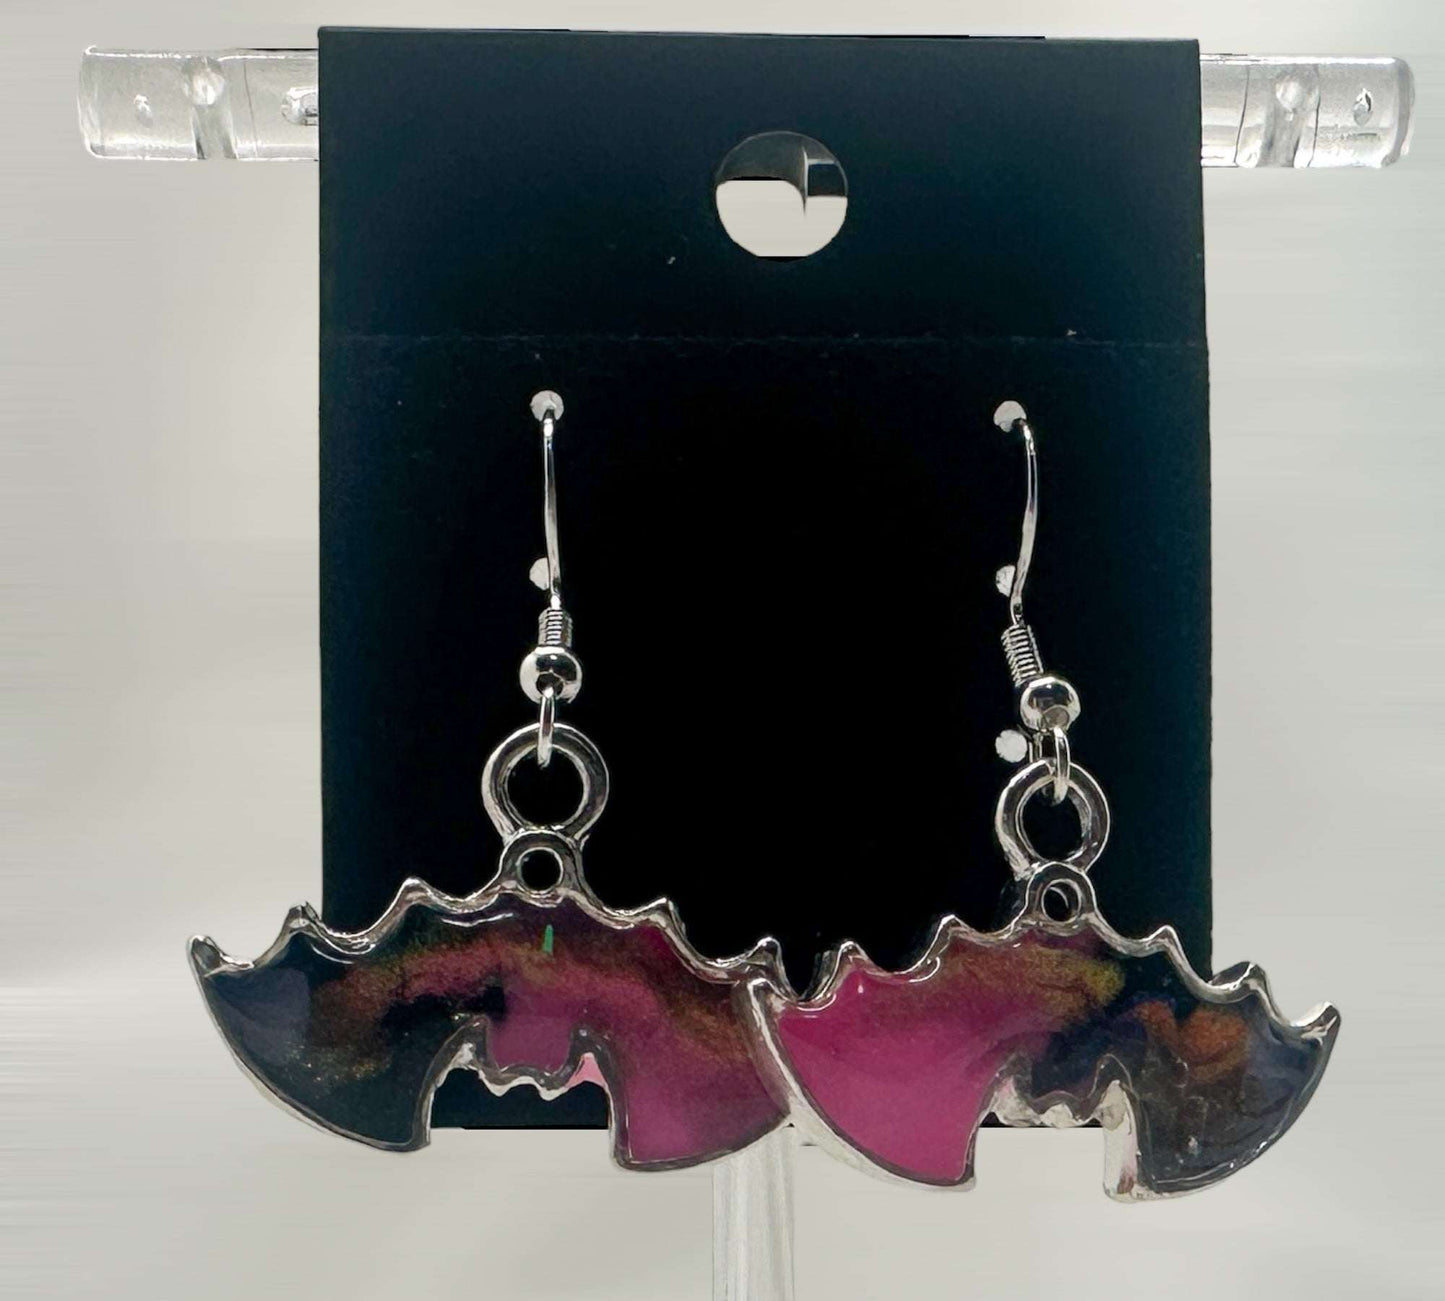 Hanging upside down bat earrings in pink and black